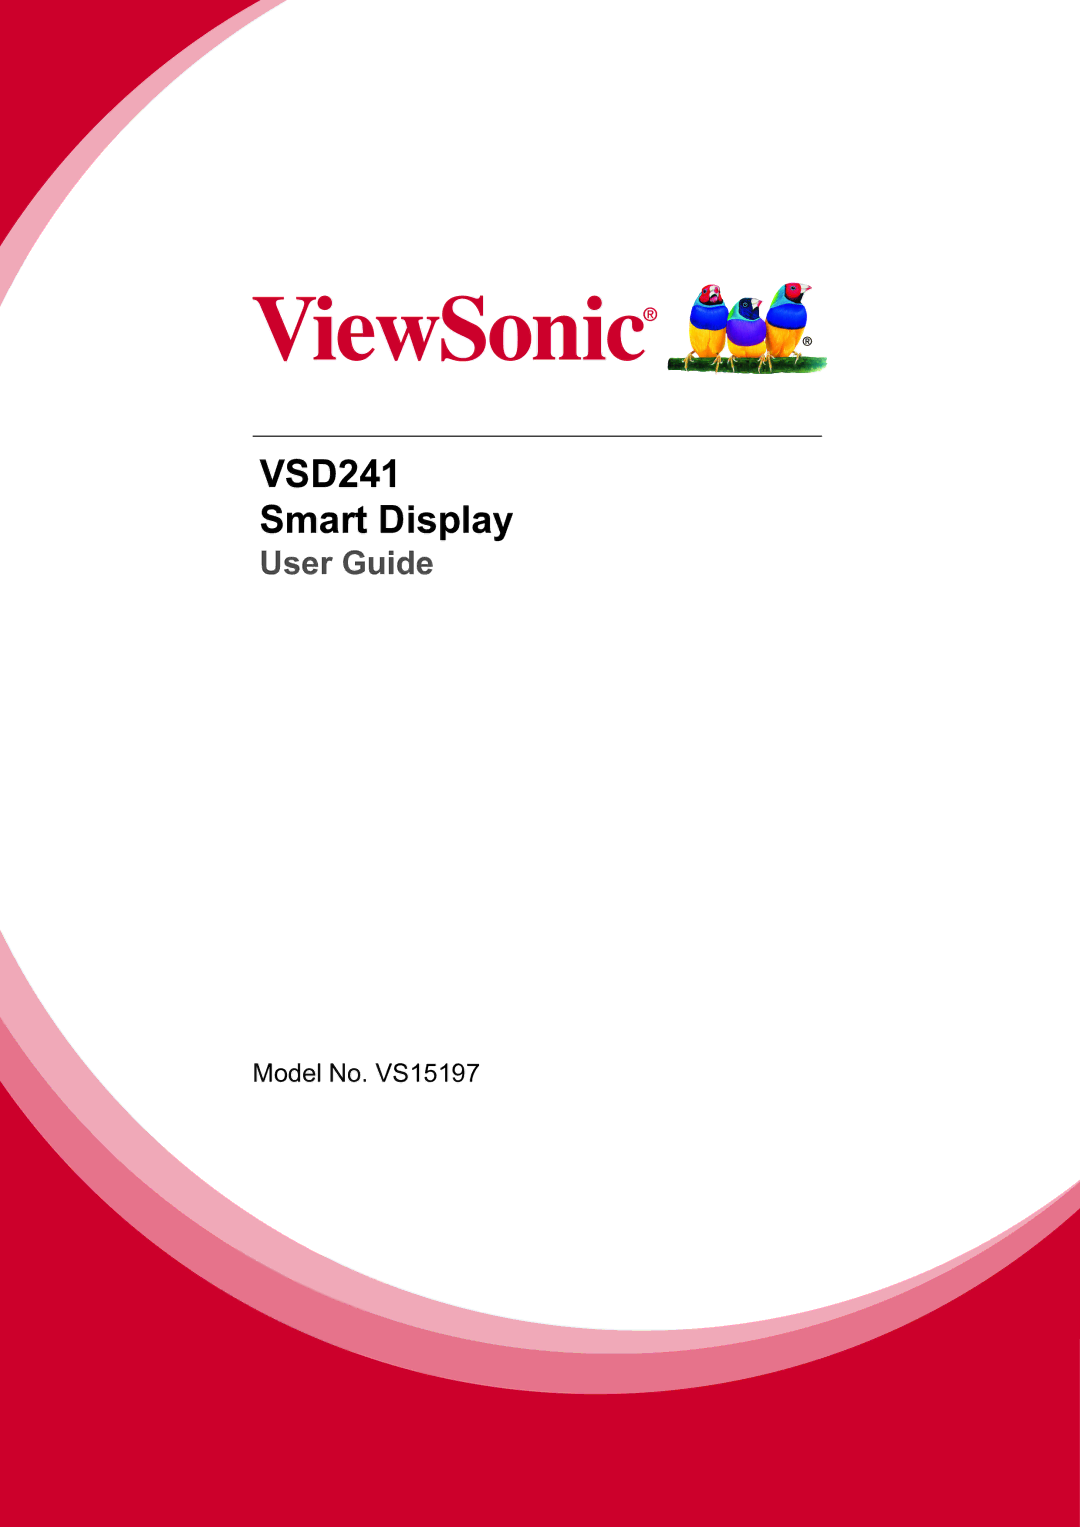 ViewSonic VSD241WTAUS0 manual VSD241 Smart Display, Model No. VS15197 